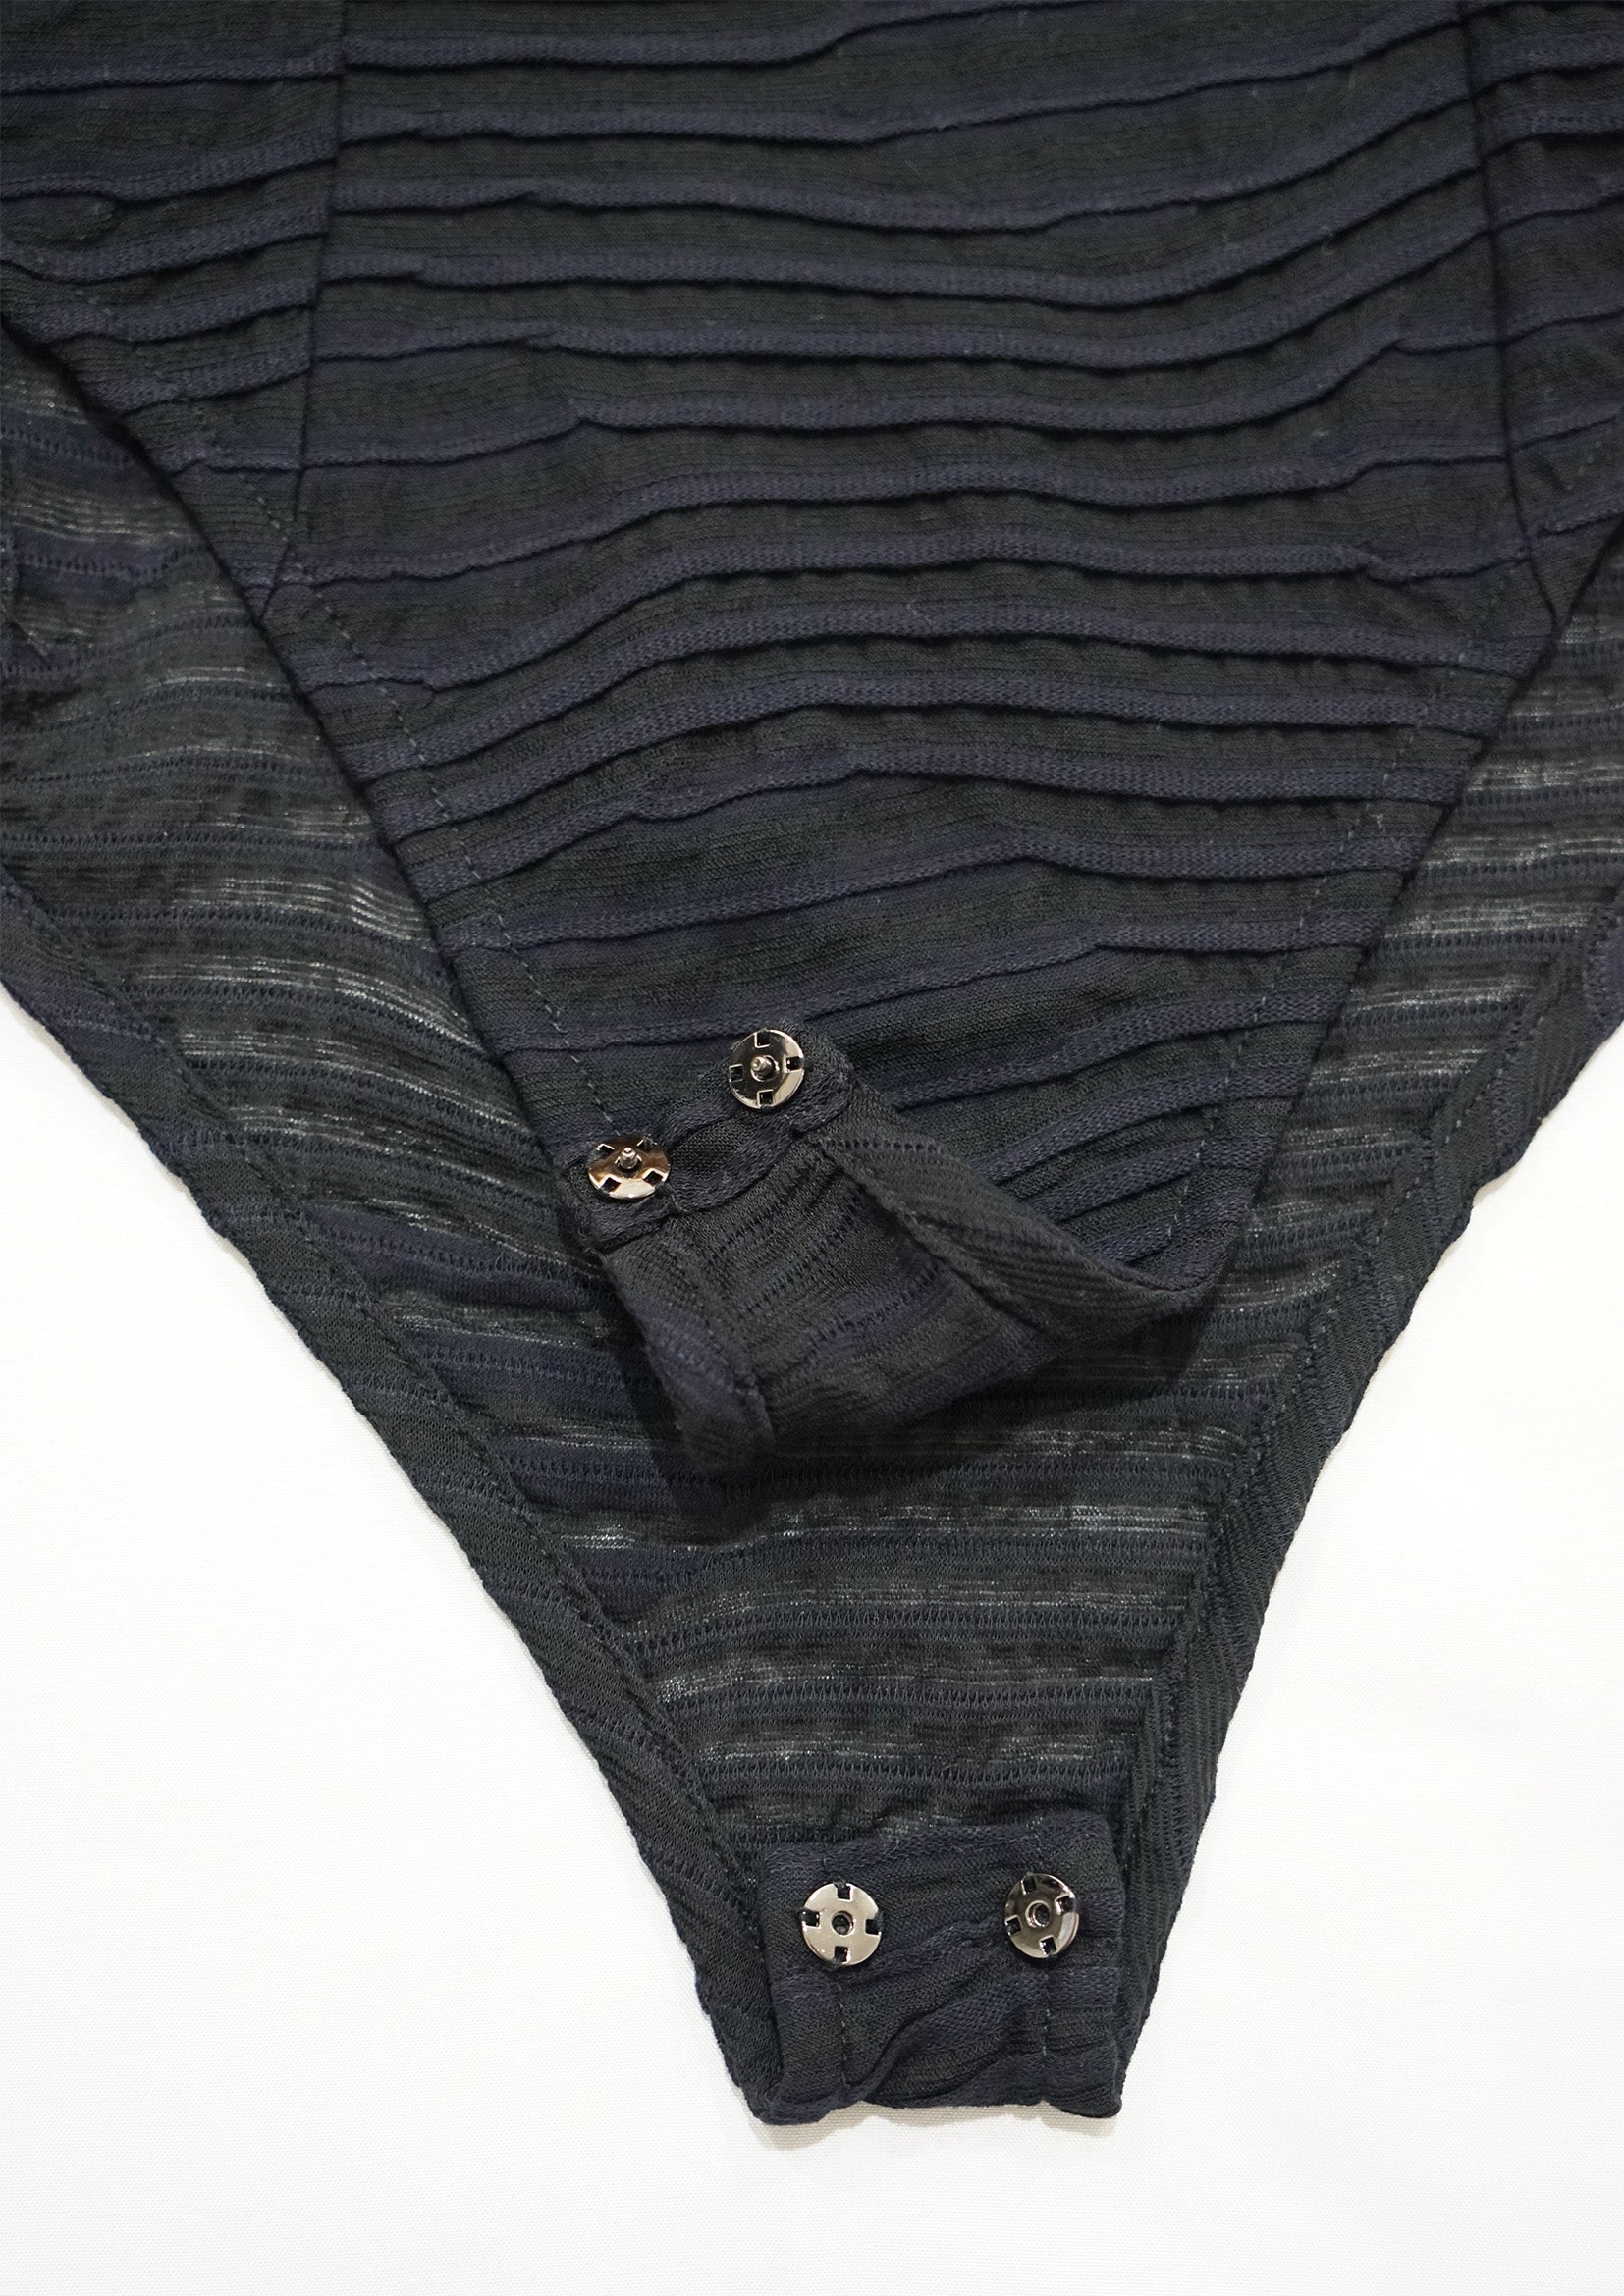 Striped low cut round neck see-through bodysuit in black & navy